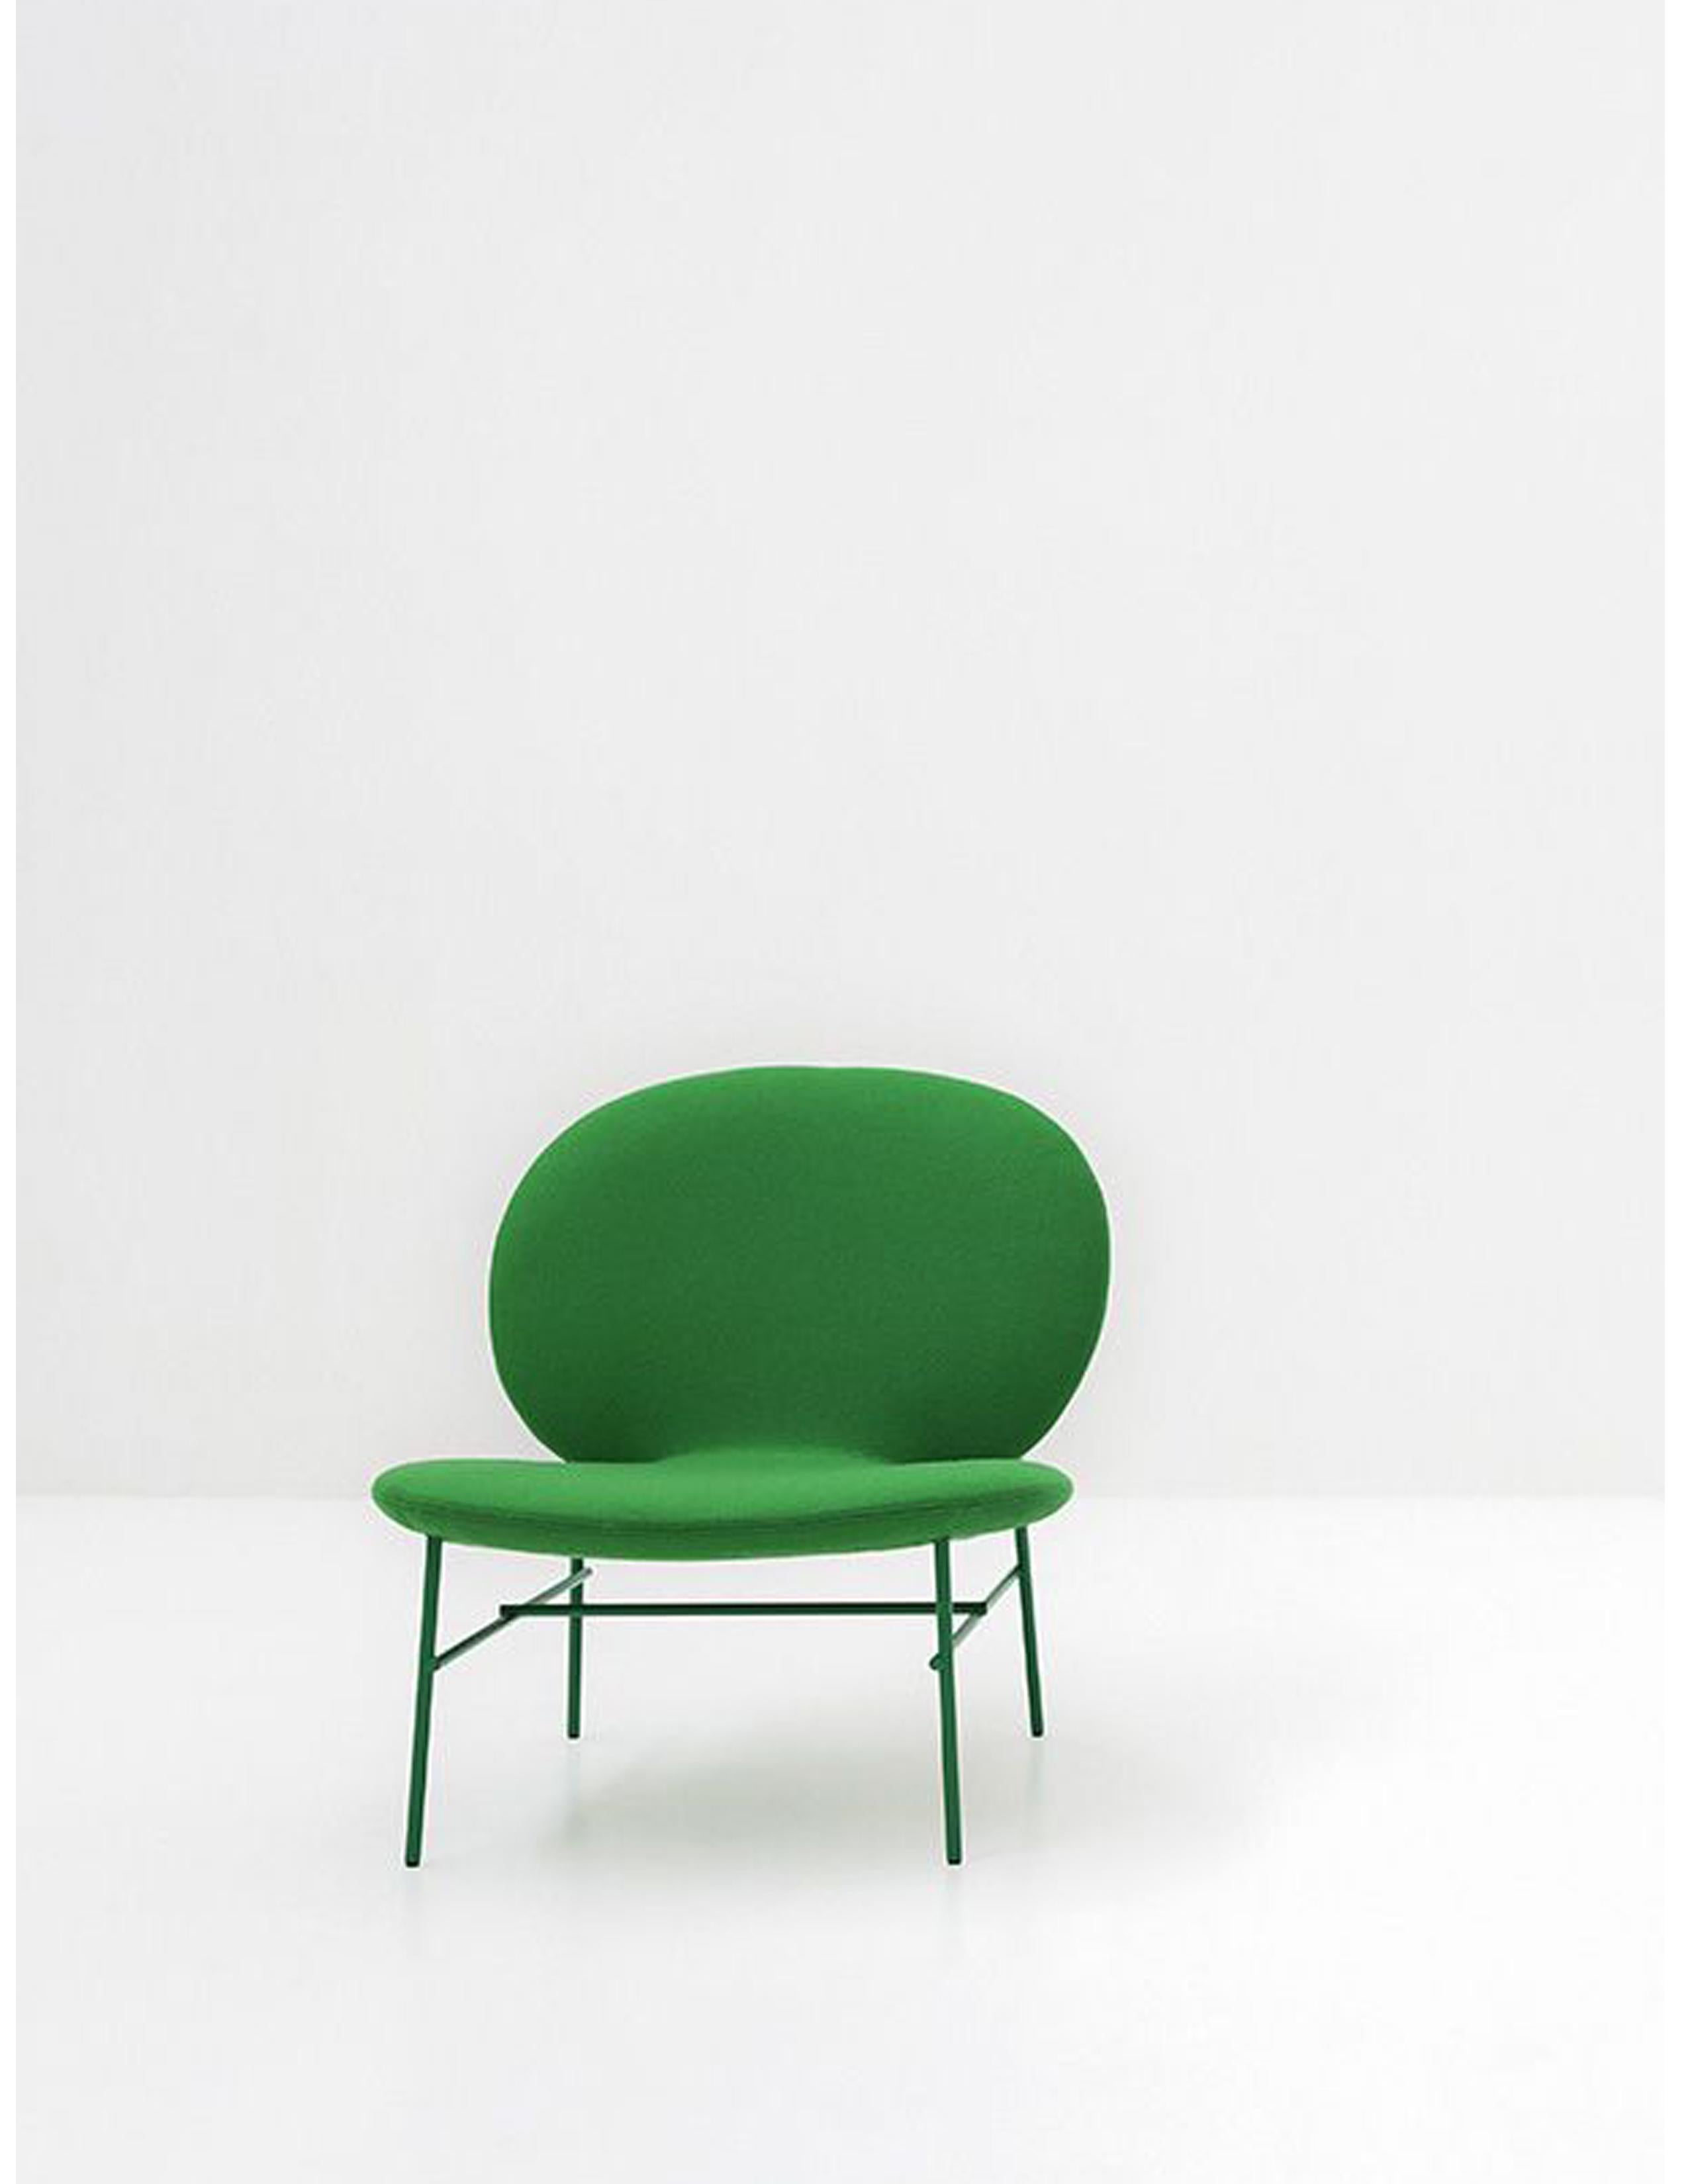 Customizable Tacchini Kelly H-Chair Designed by Claesson Koivisto Rune 2